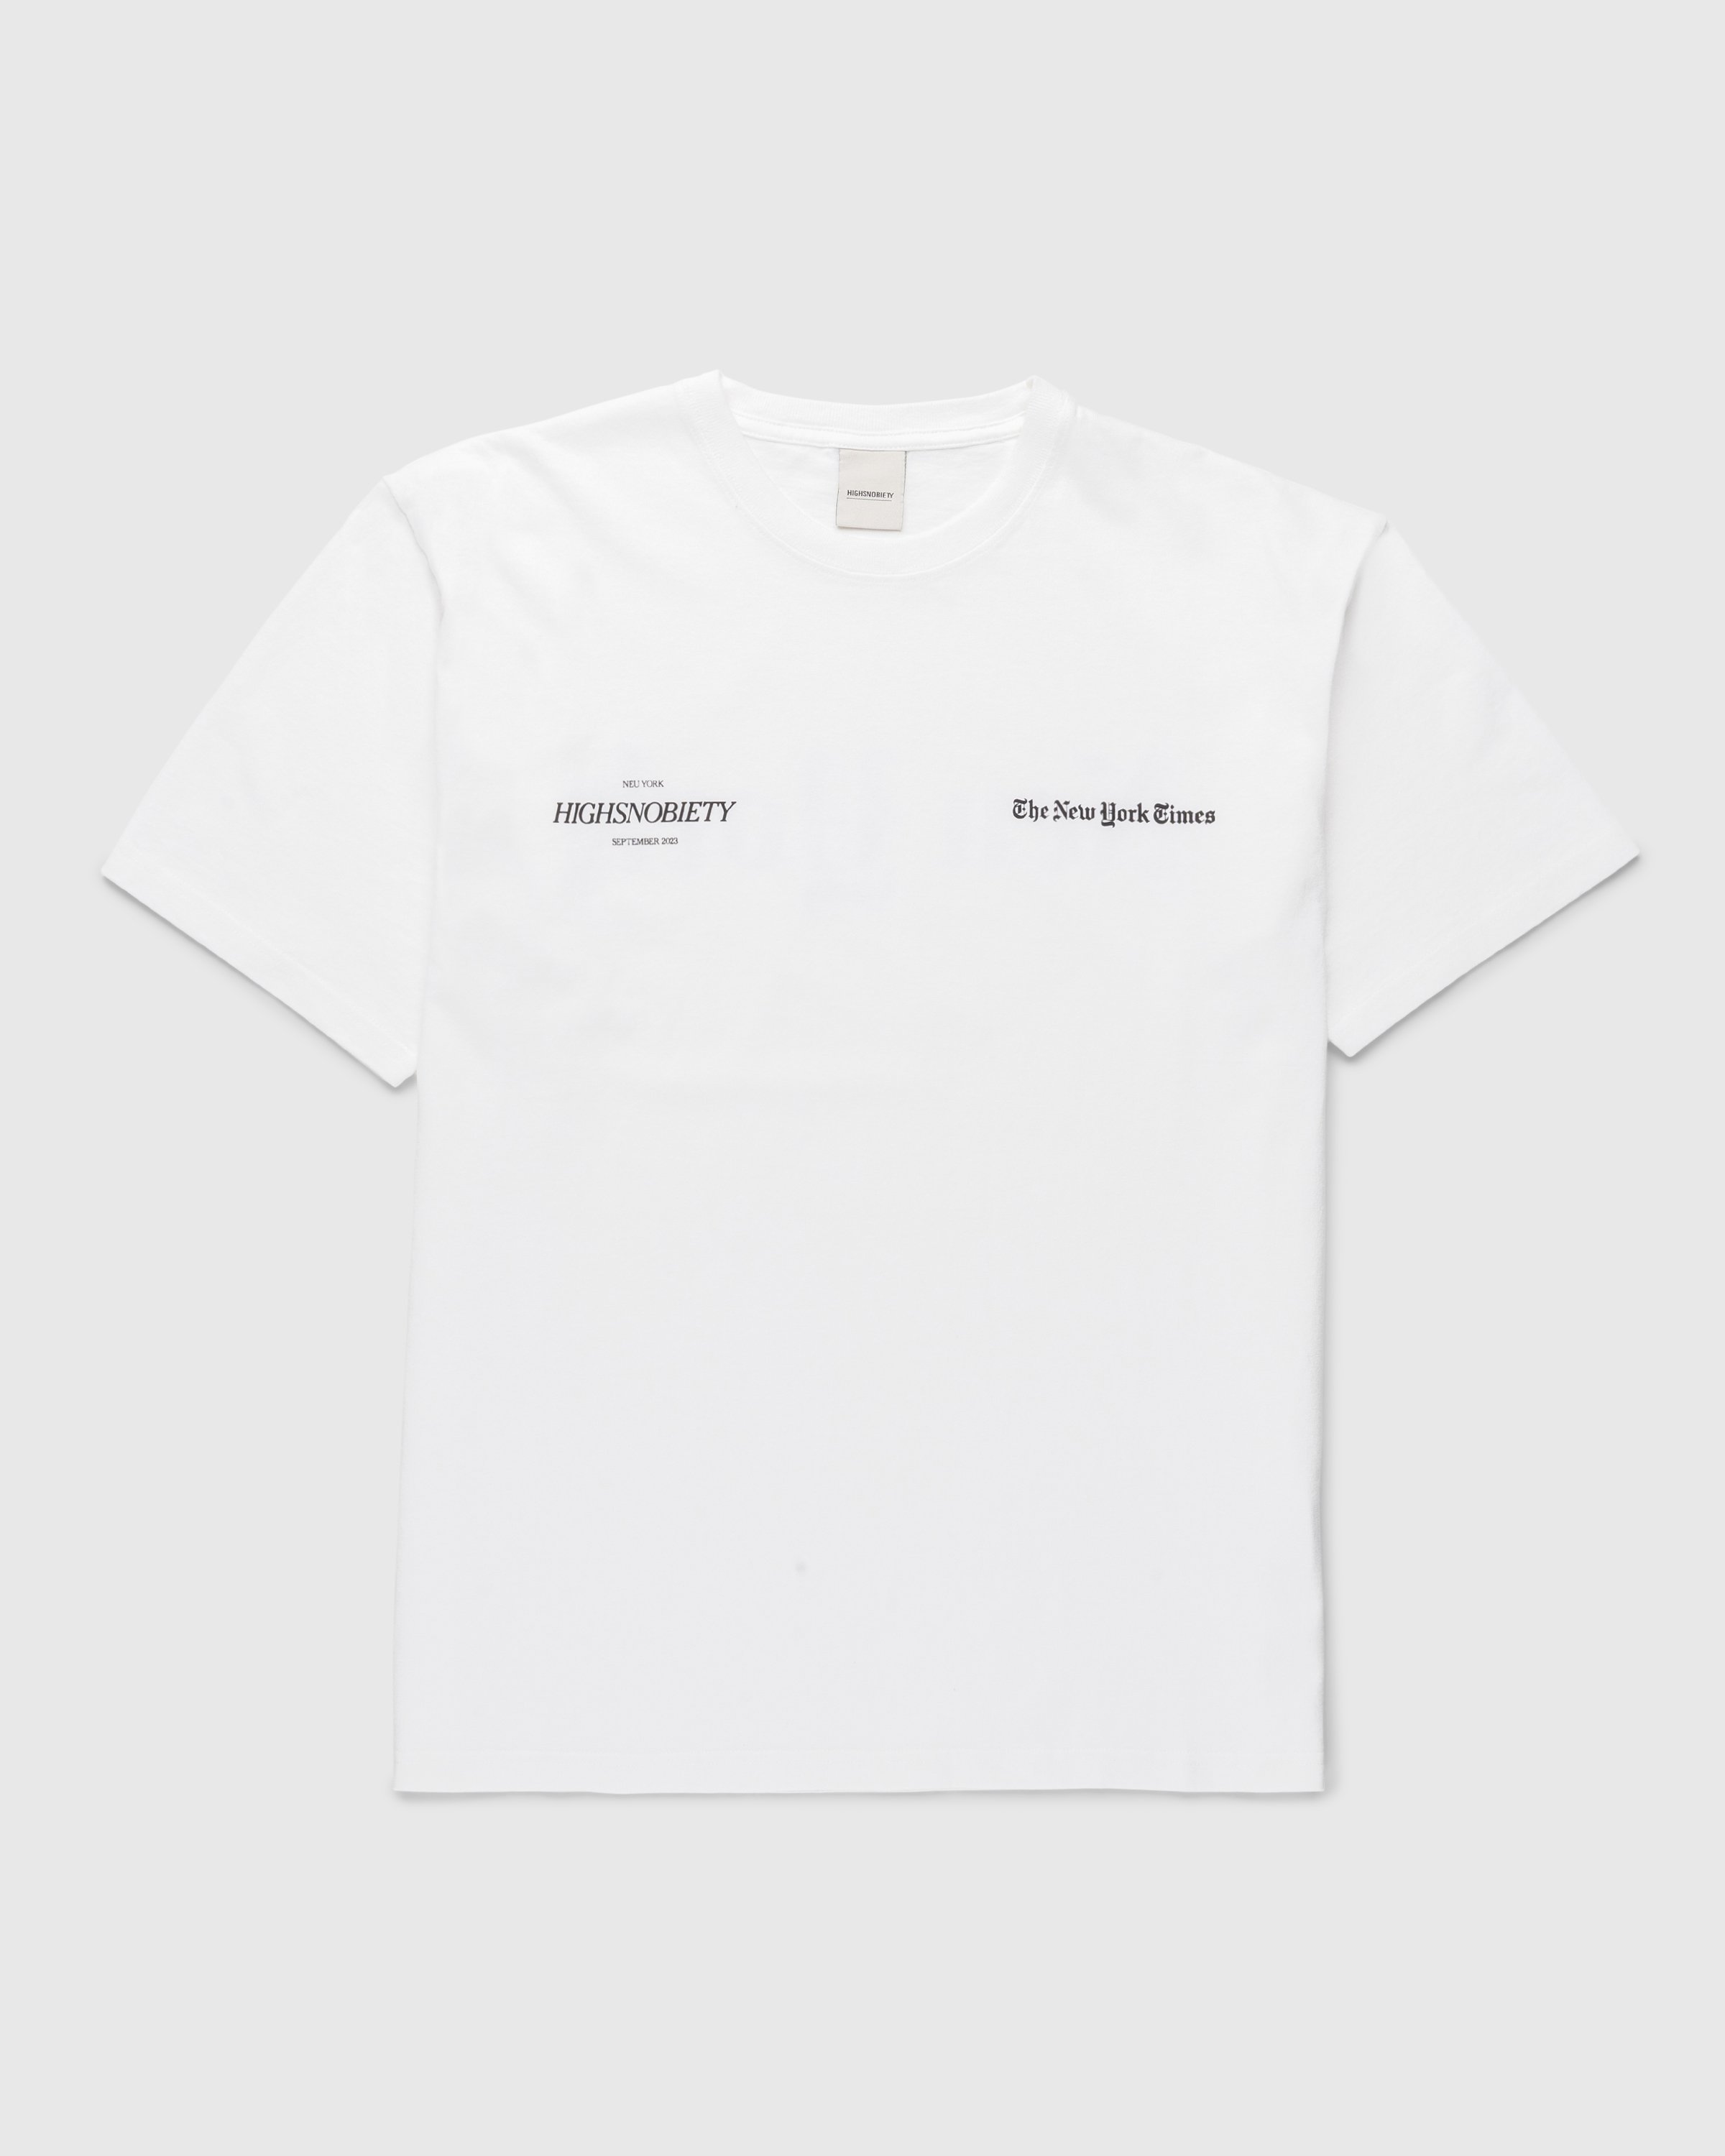 The New York Times x Highsnobiety - T-Shirt - Clothing - White - Image 2